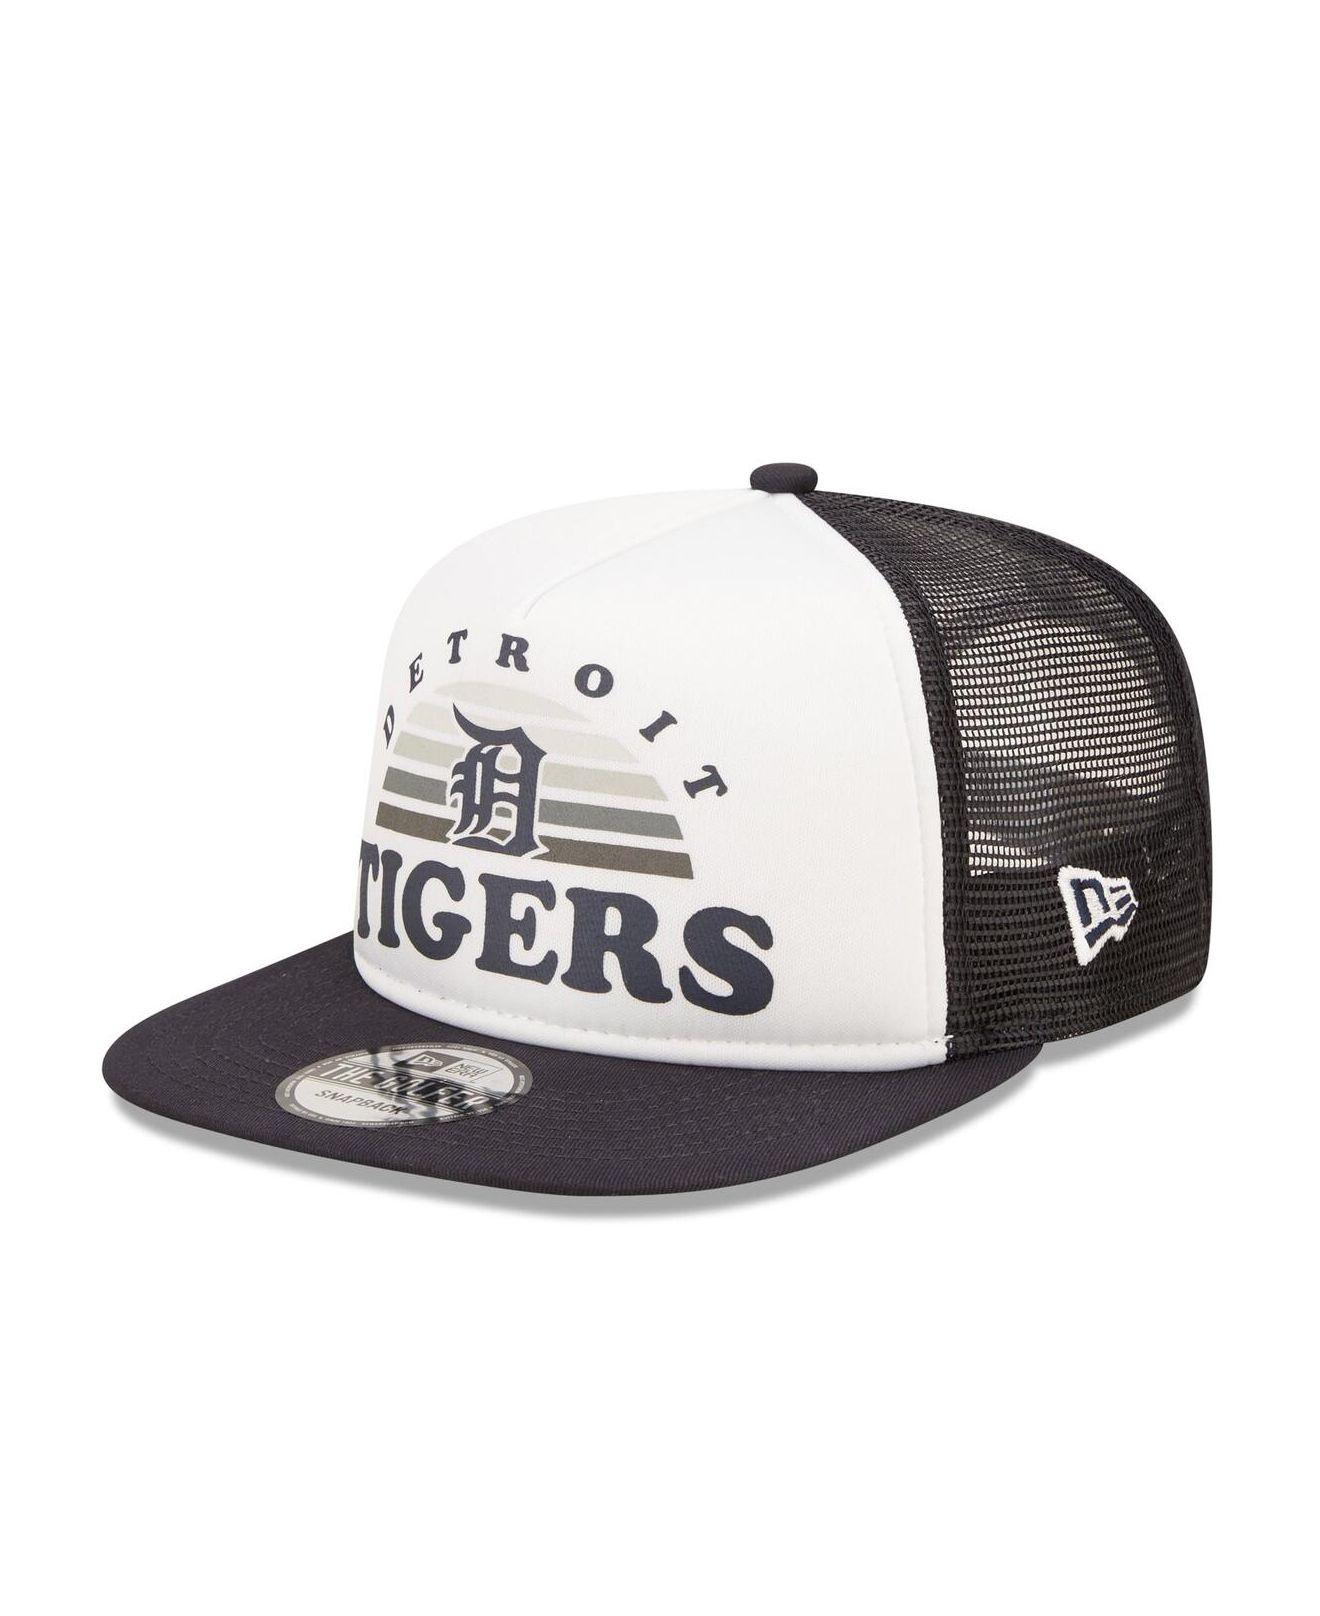 Detroit Tigers New Era Base Trucker 9FIFTY Snapback Hat - Navy/White